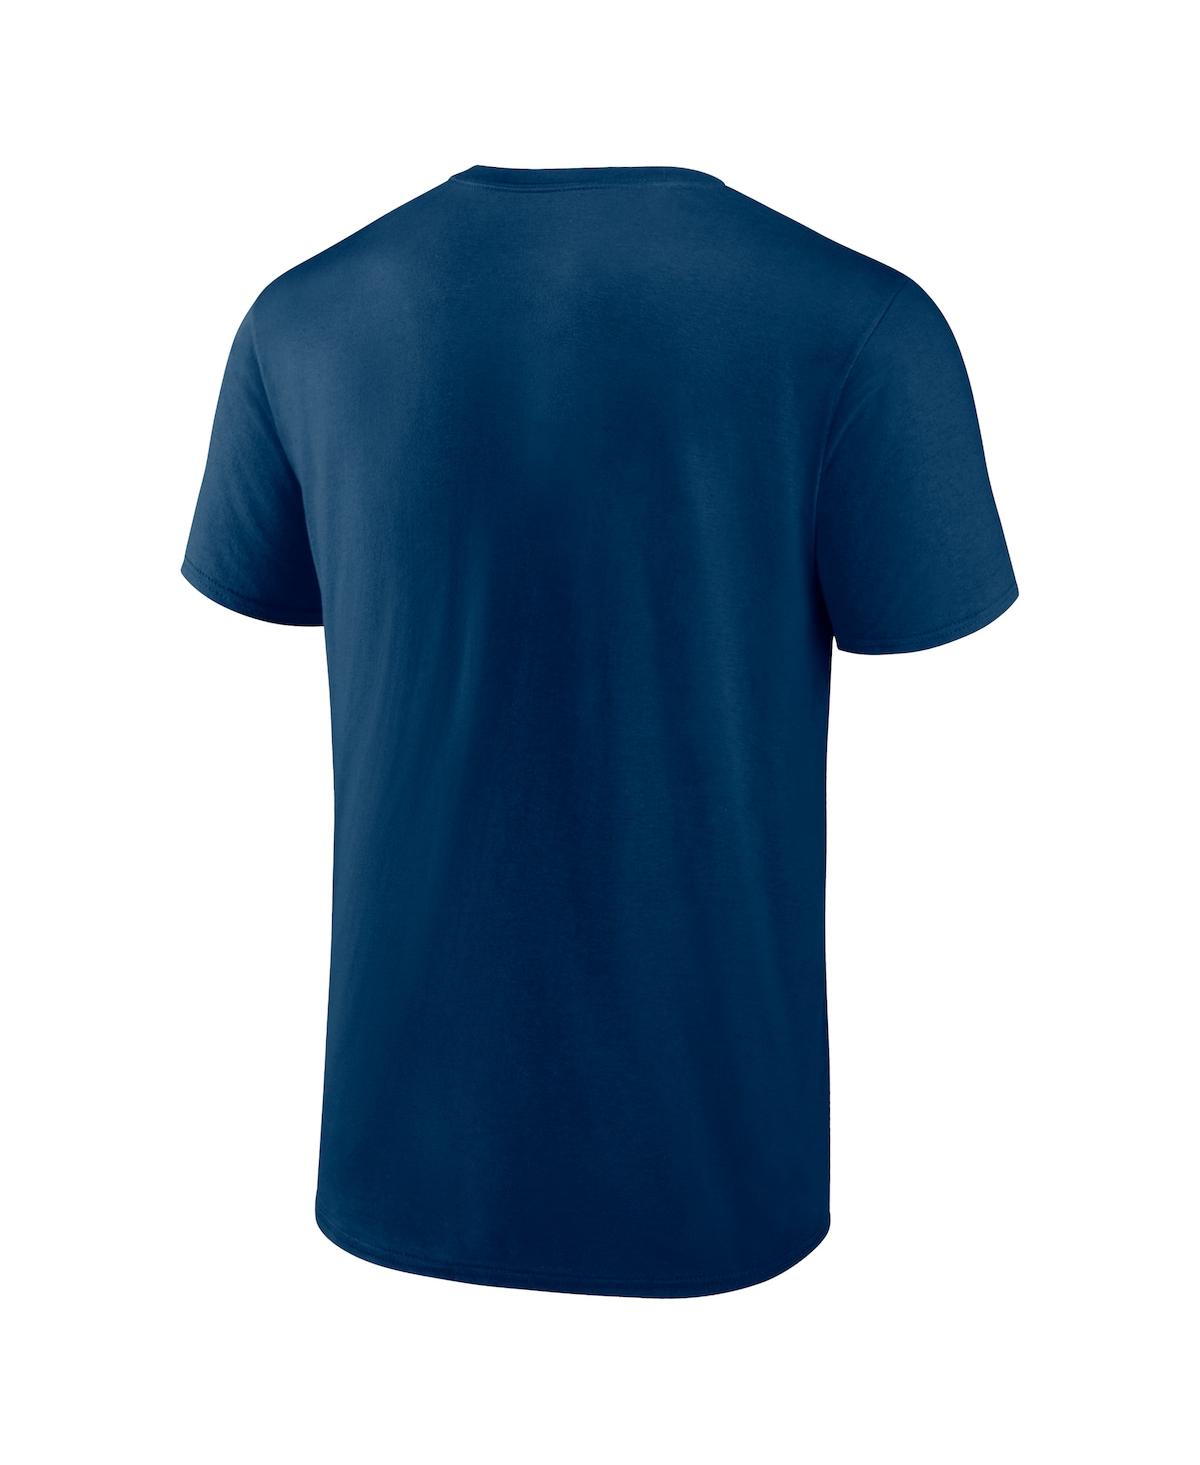 Shop Fanatics Men's  Navy Detroit Tigers X 2023 Summerslam T-shirt